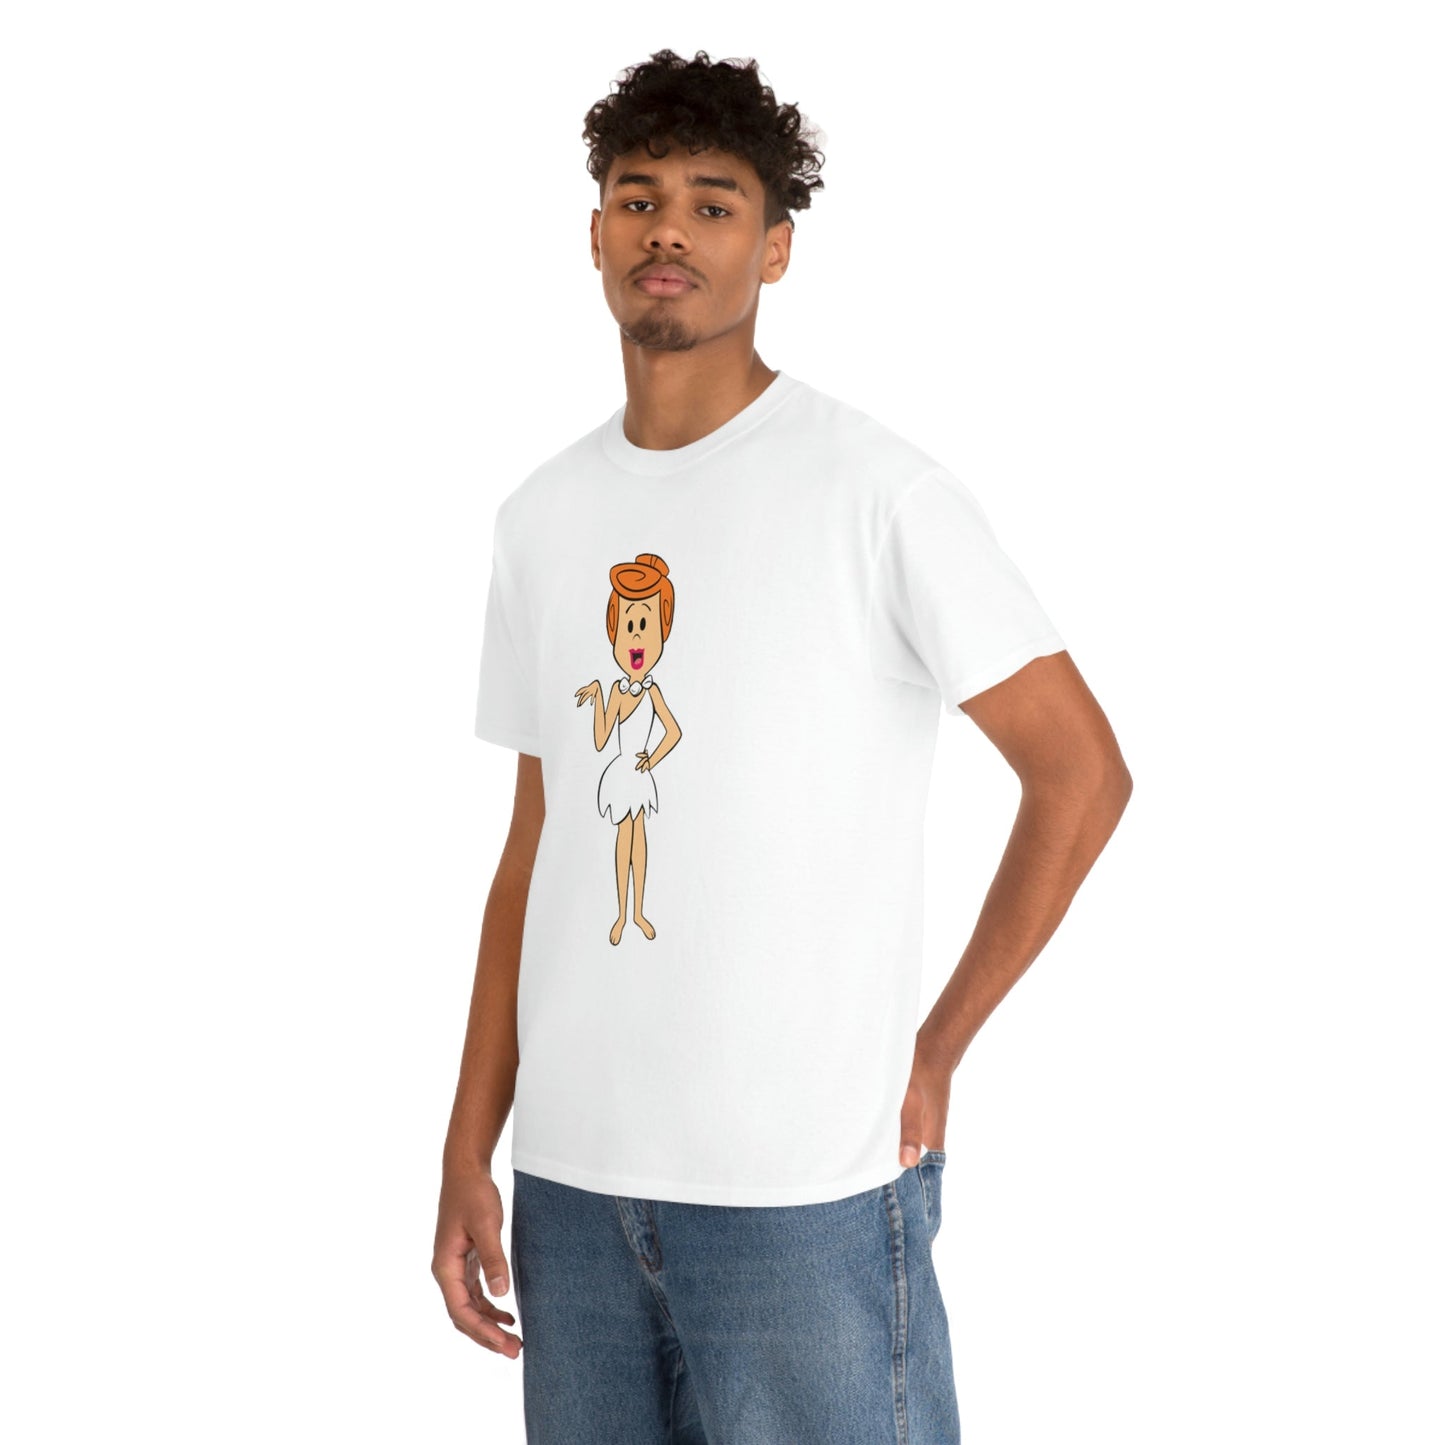 Wilma Flintstone Cartoon T-Shirt - Perfect for Fans of The Flintstones - RetroTeeShop